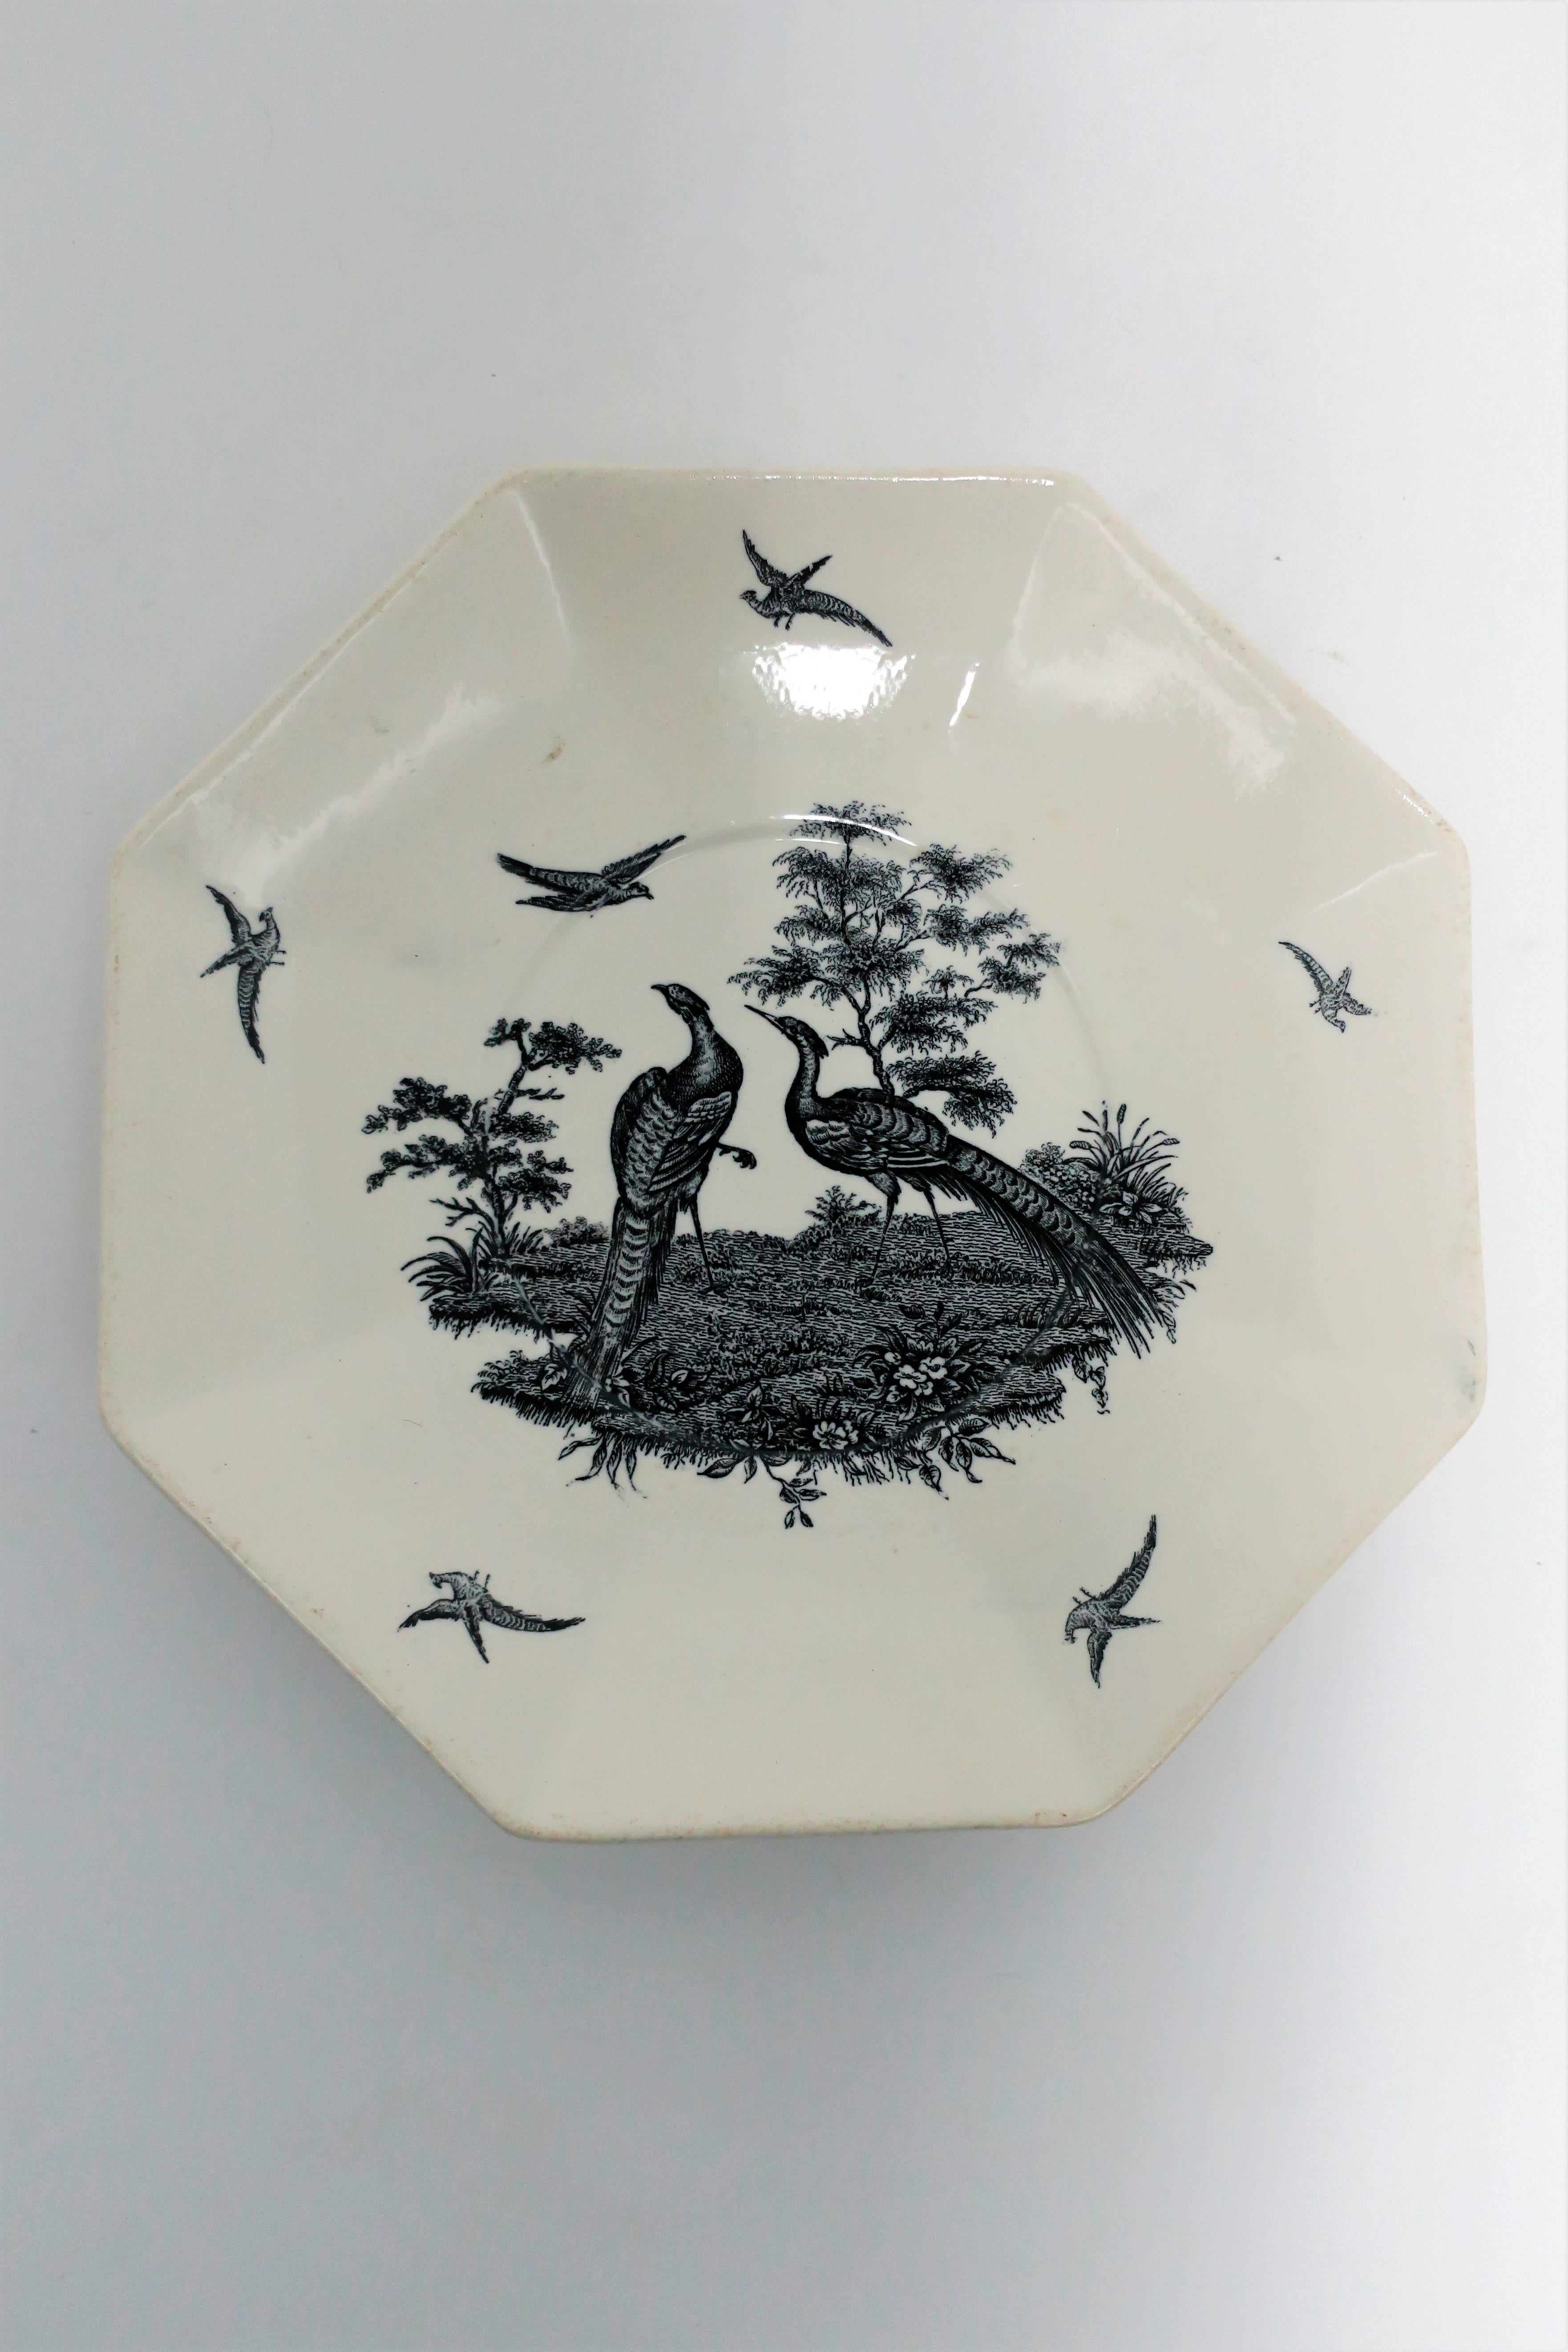 wedgwood bird plates